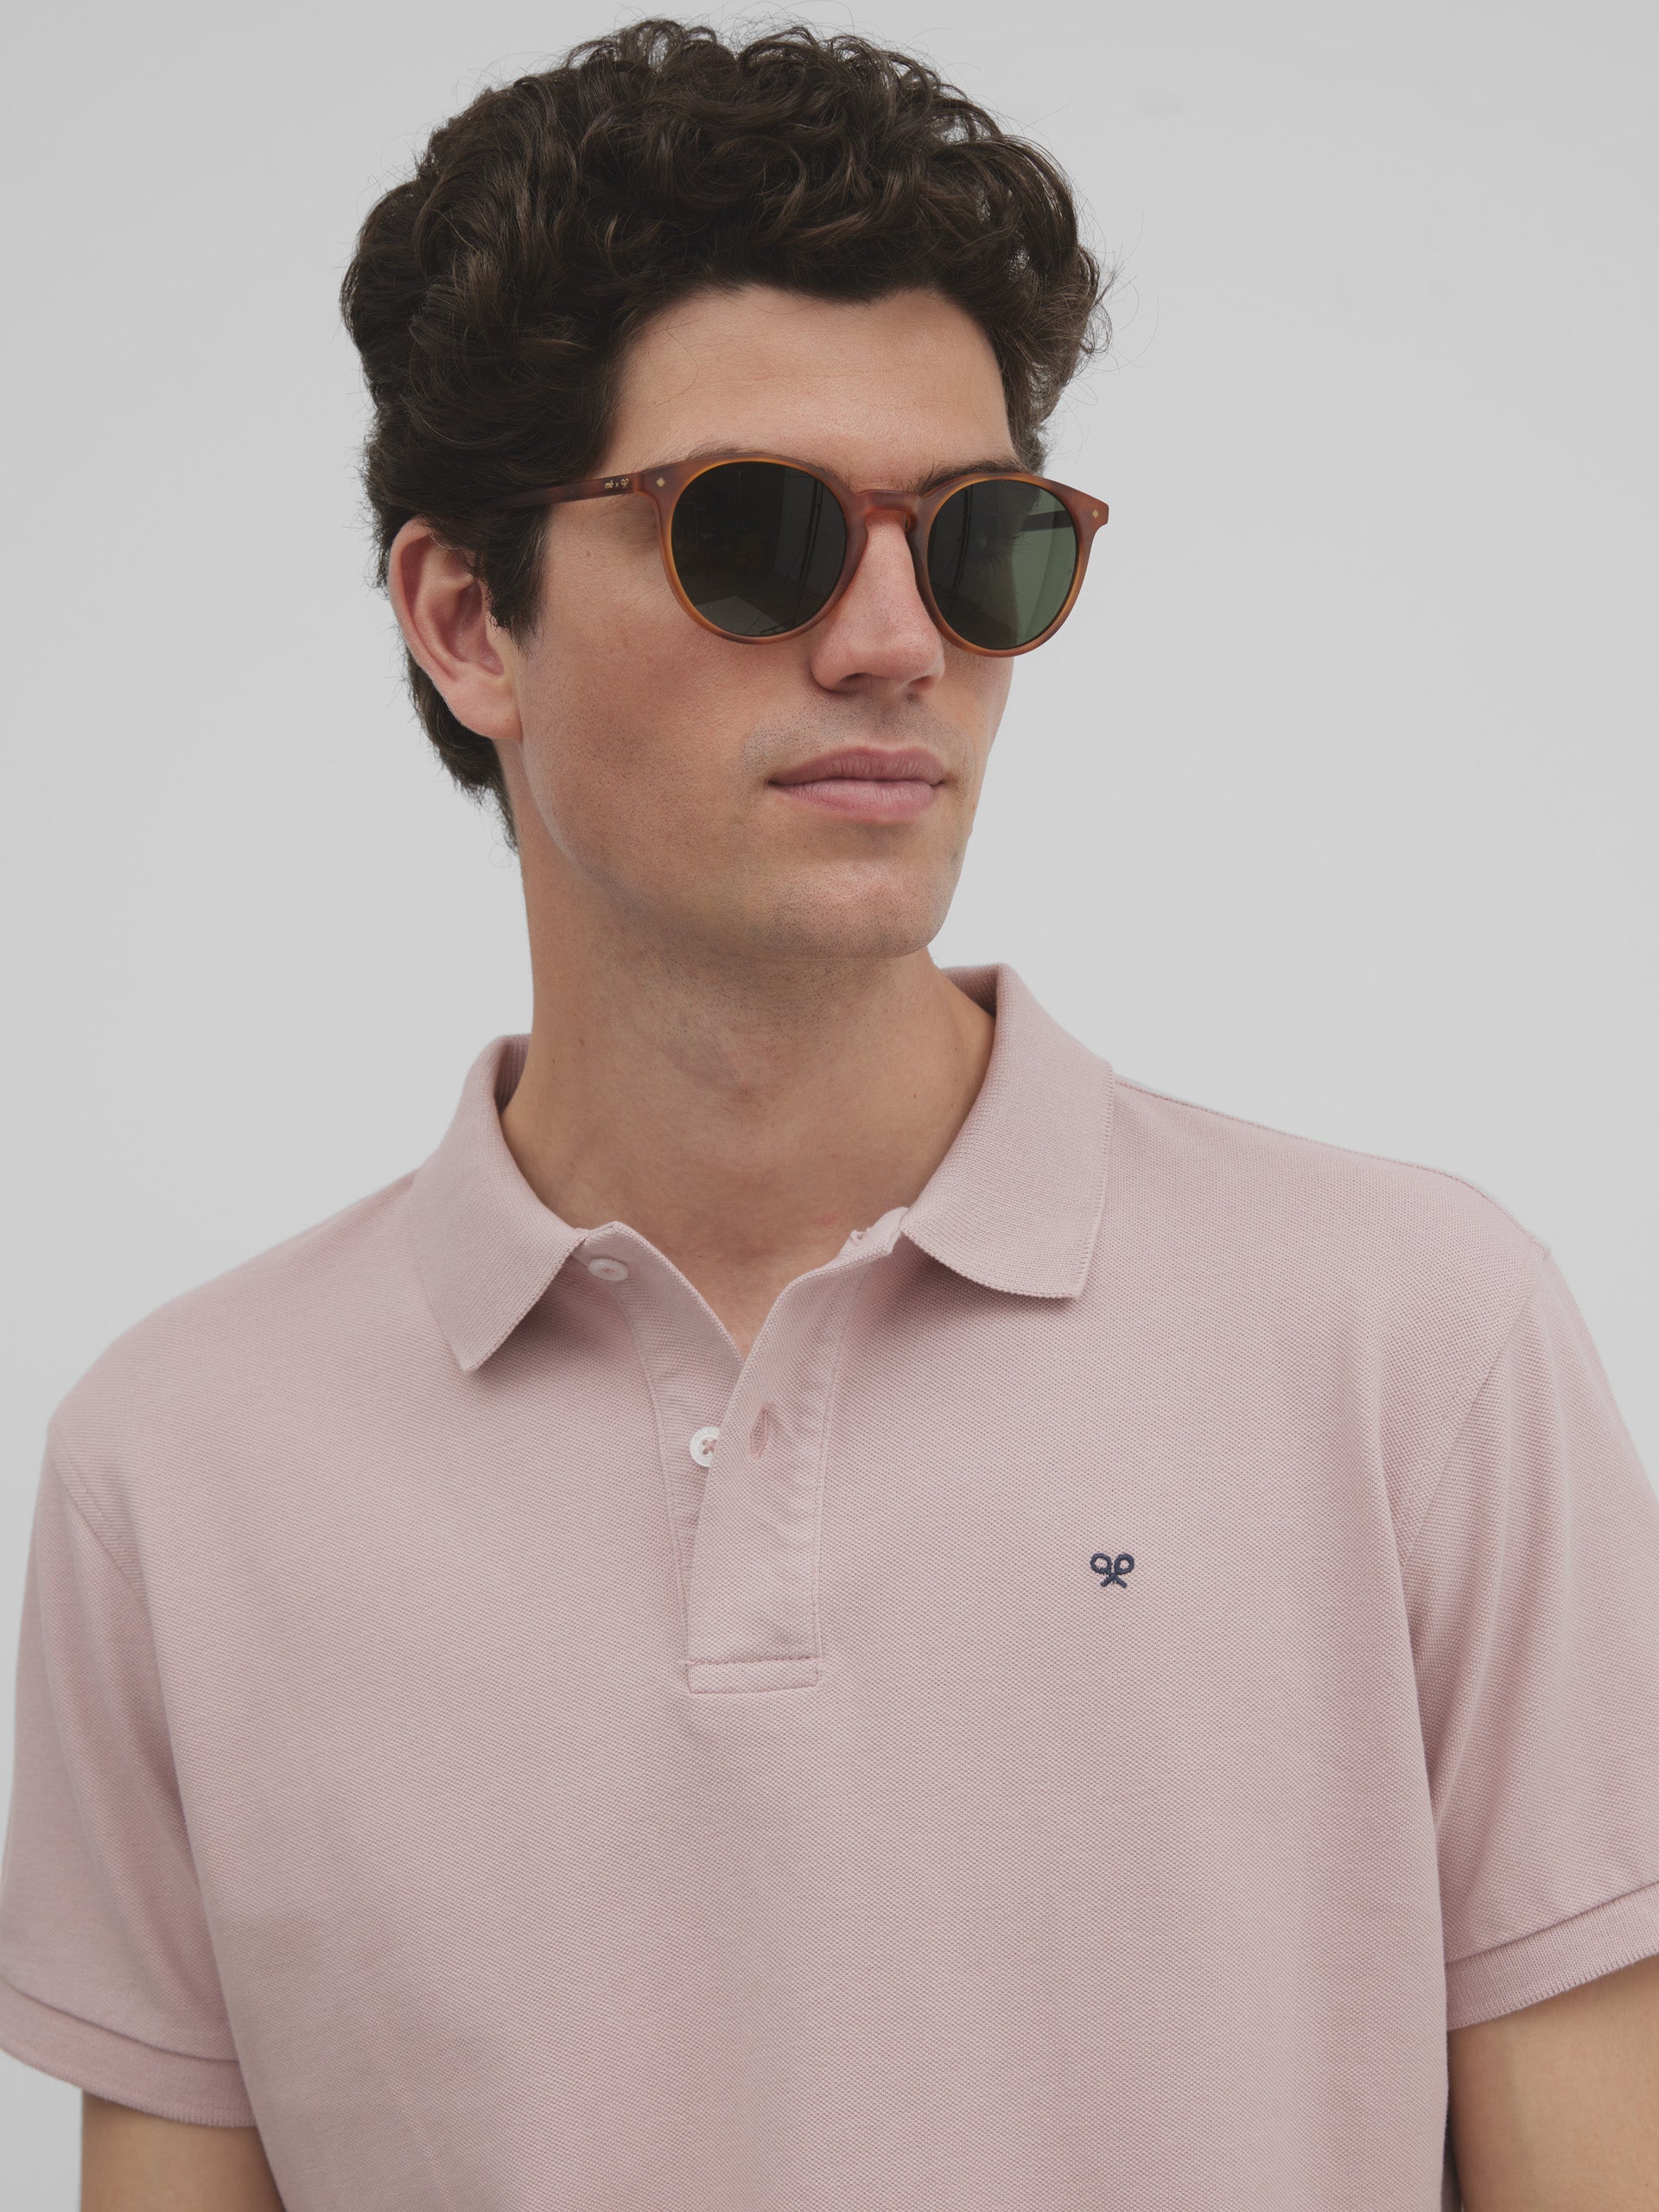 Classic plain light pink polo shirt